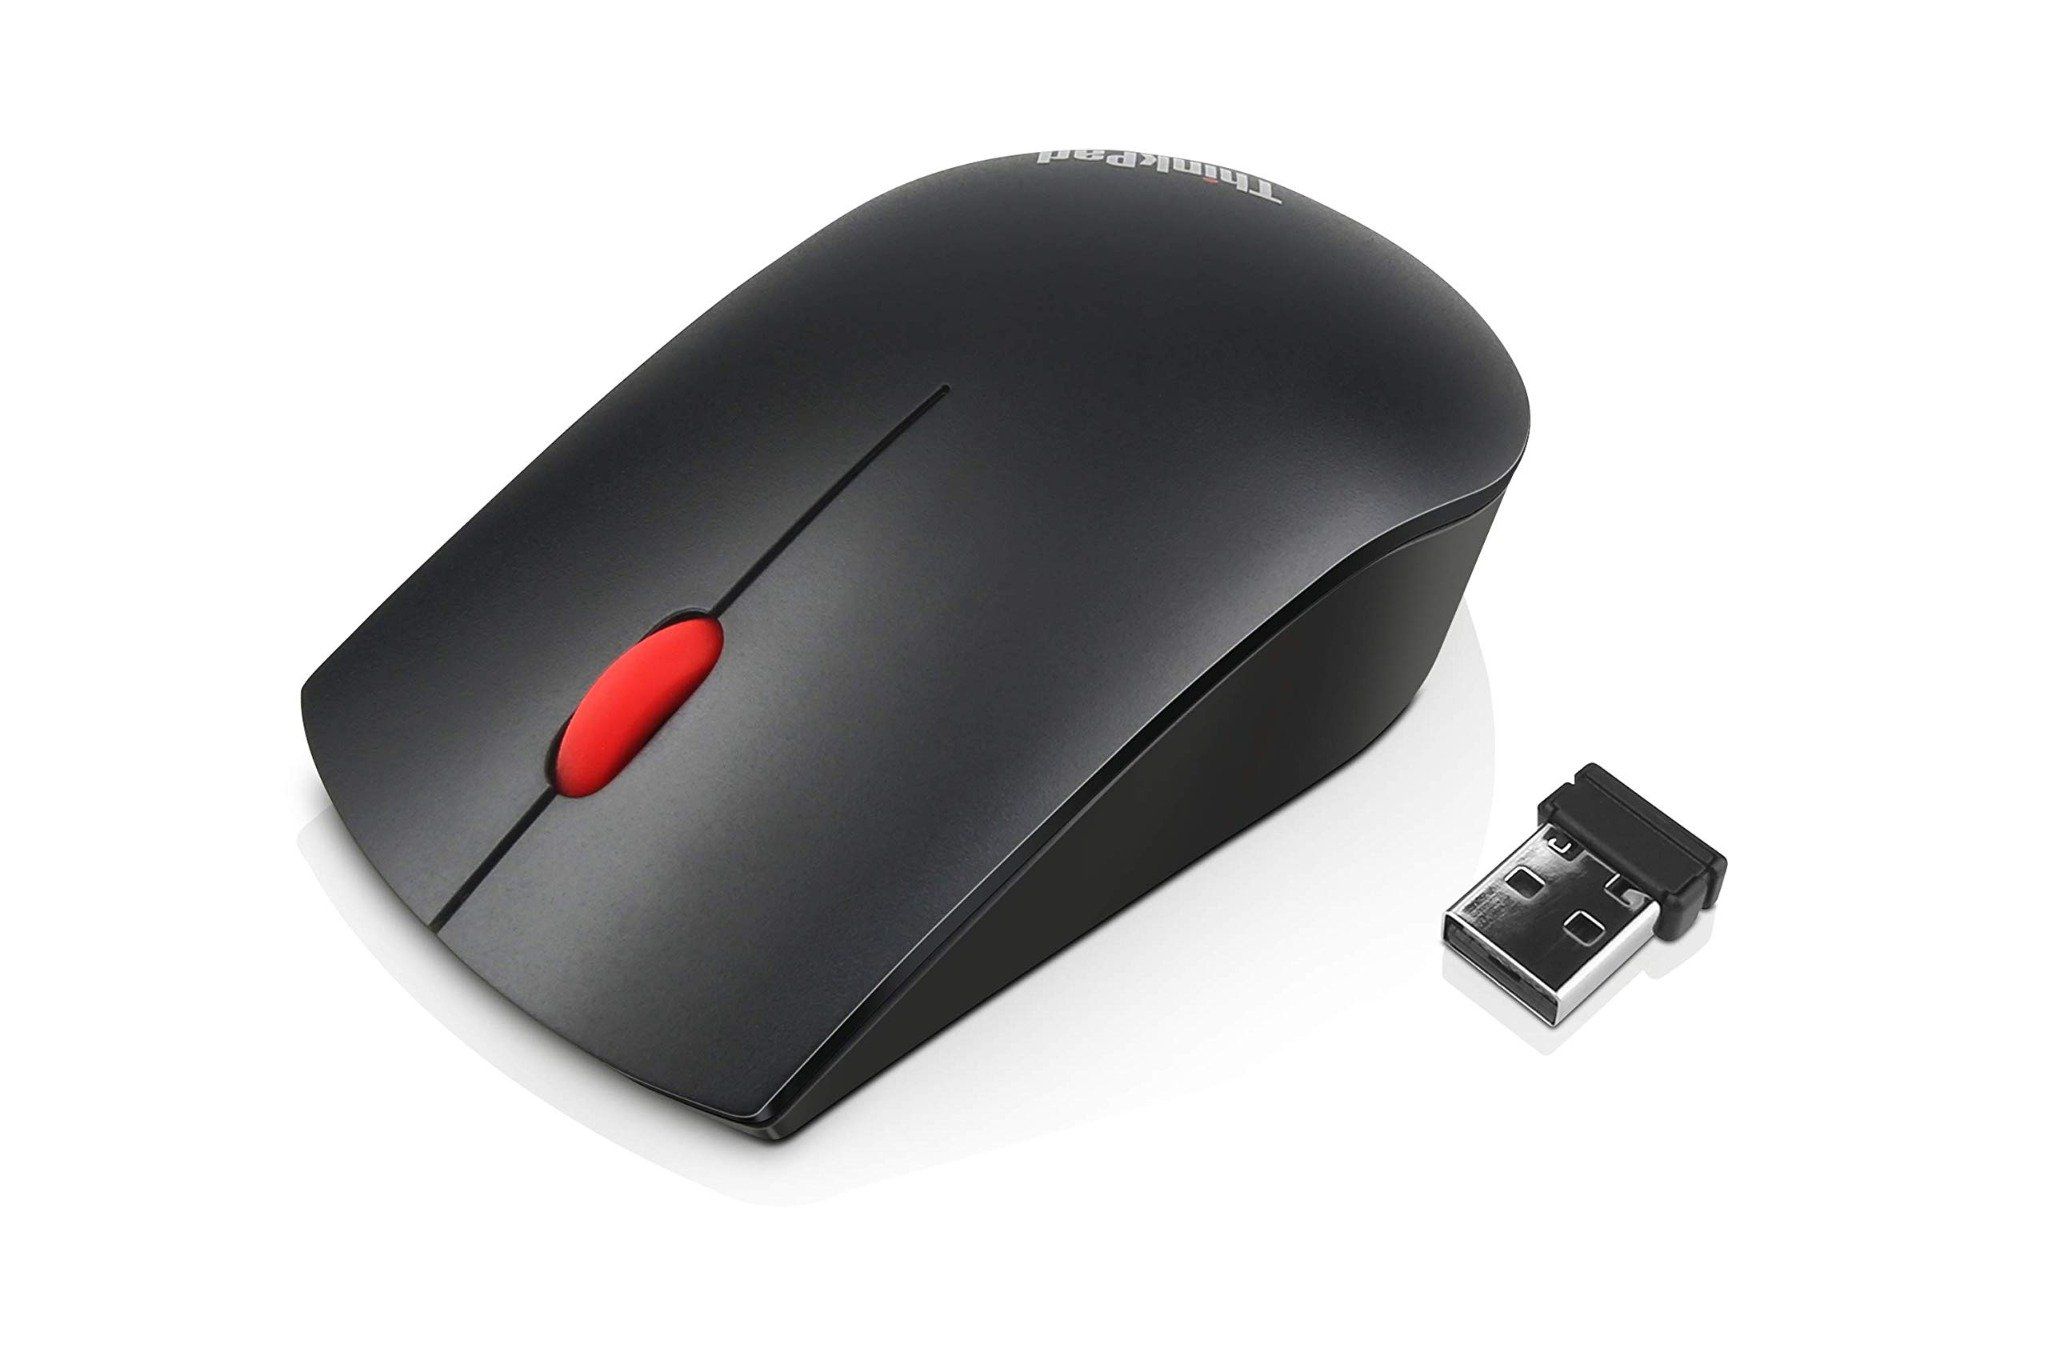  LENOVO MOUSE ThinkPad  Wireless Mouse 